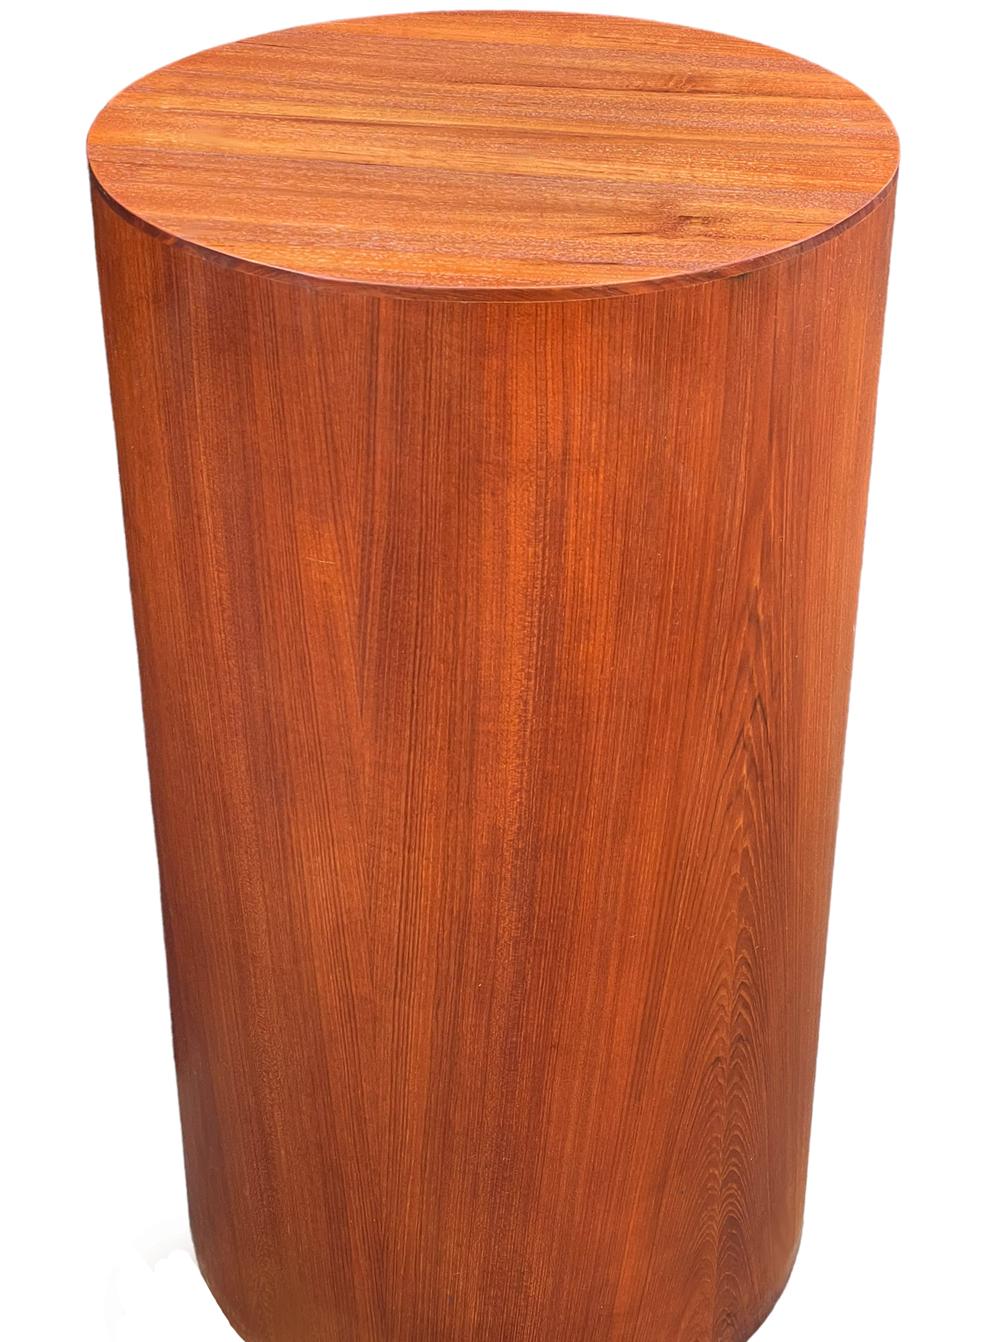 Tall Mid Century Danish Modern Round Circular Teak Drum Table / Display Pedestal For Sale 2